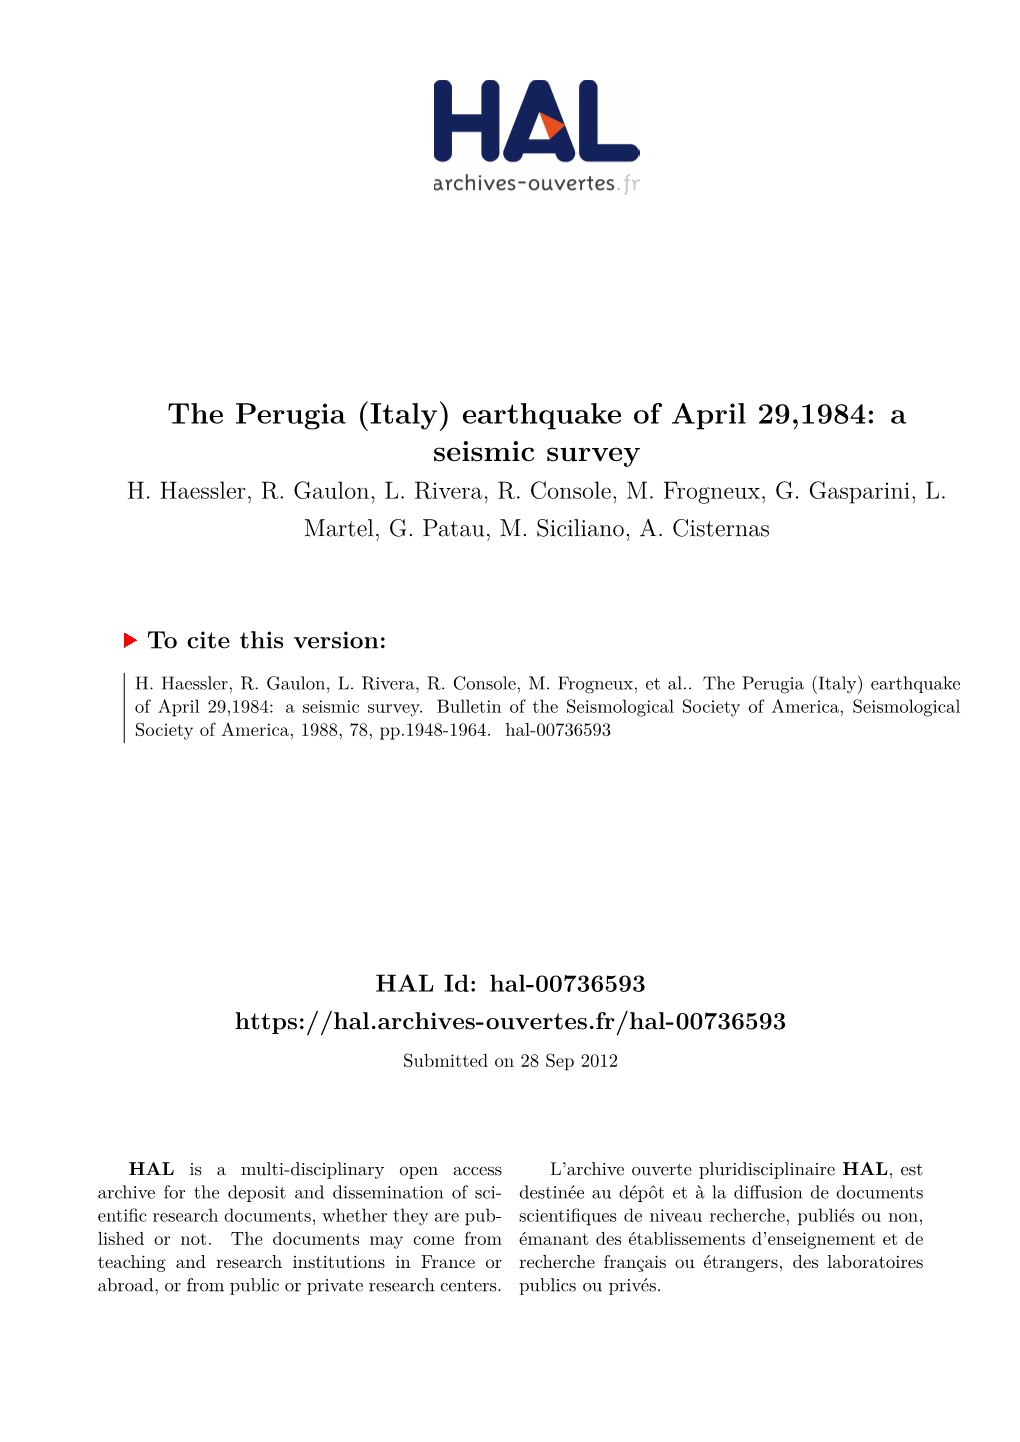 The Perugia (Italy) Earthquake of April 29,1984: a Seismic Survey H